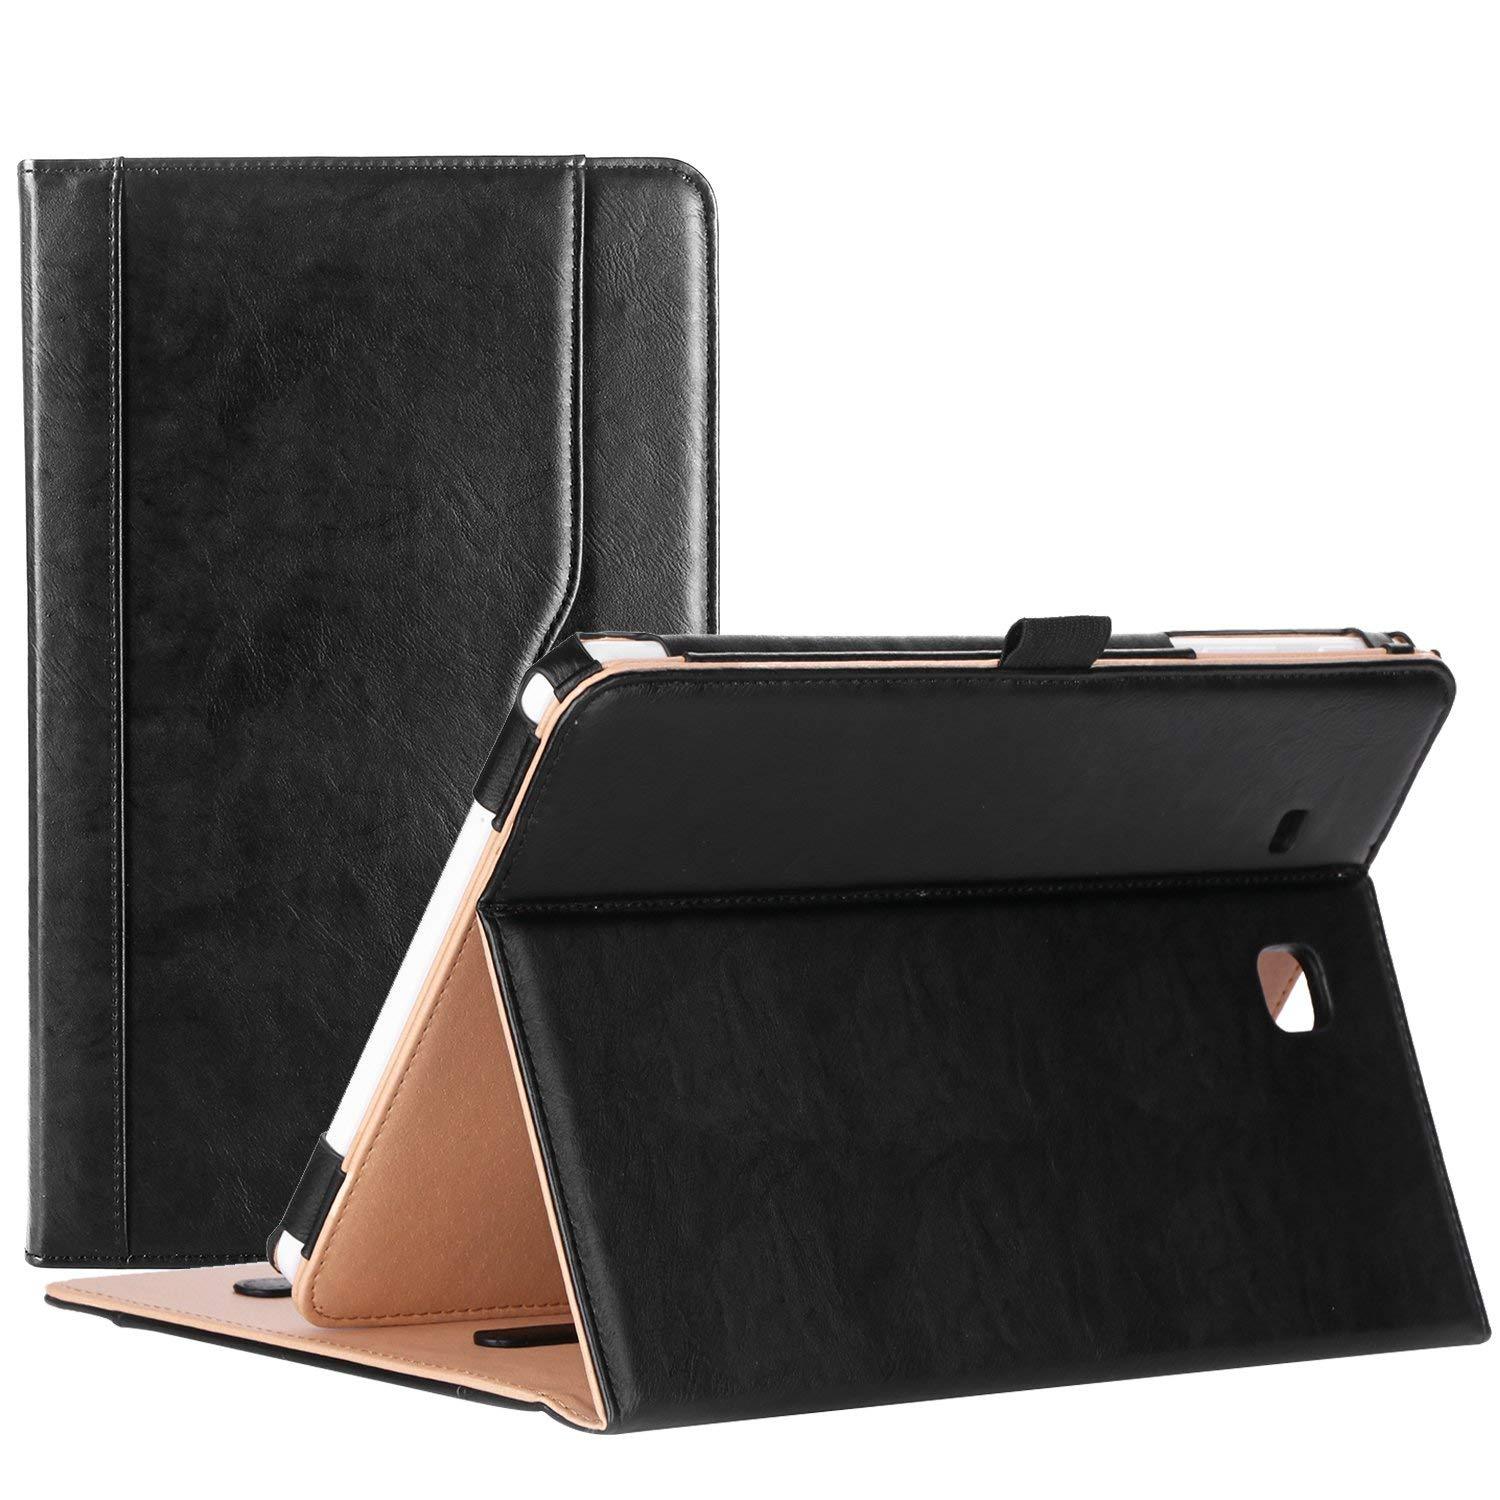 Galaxy Tab E 9.6 T560 Leather Folio Case